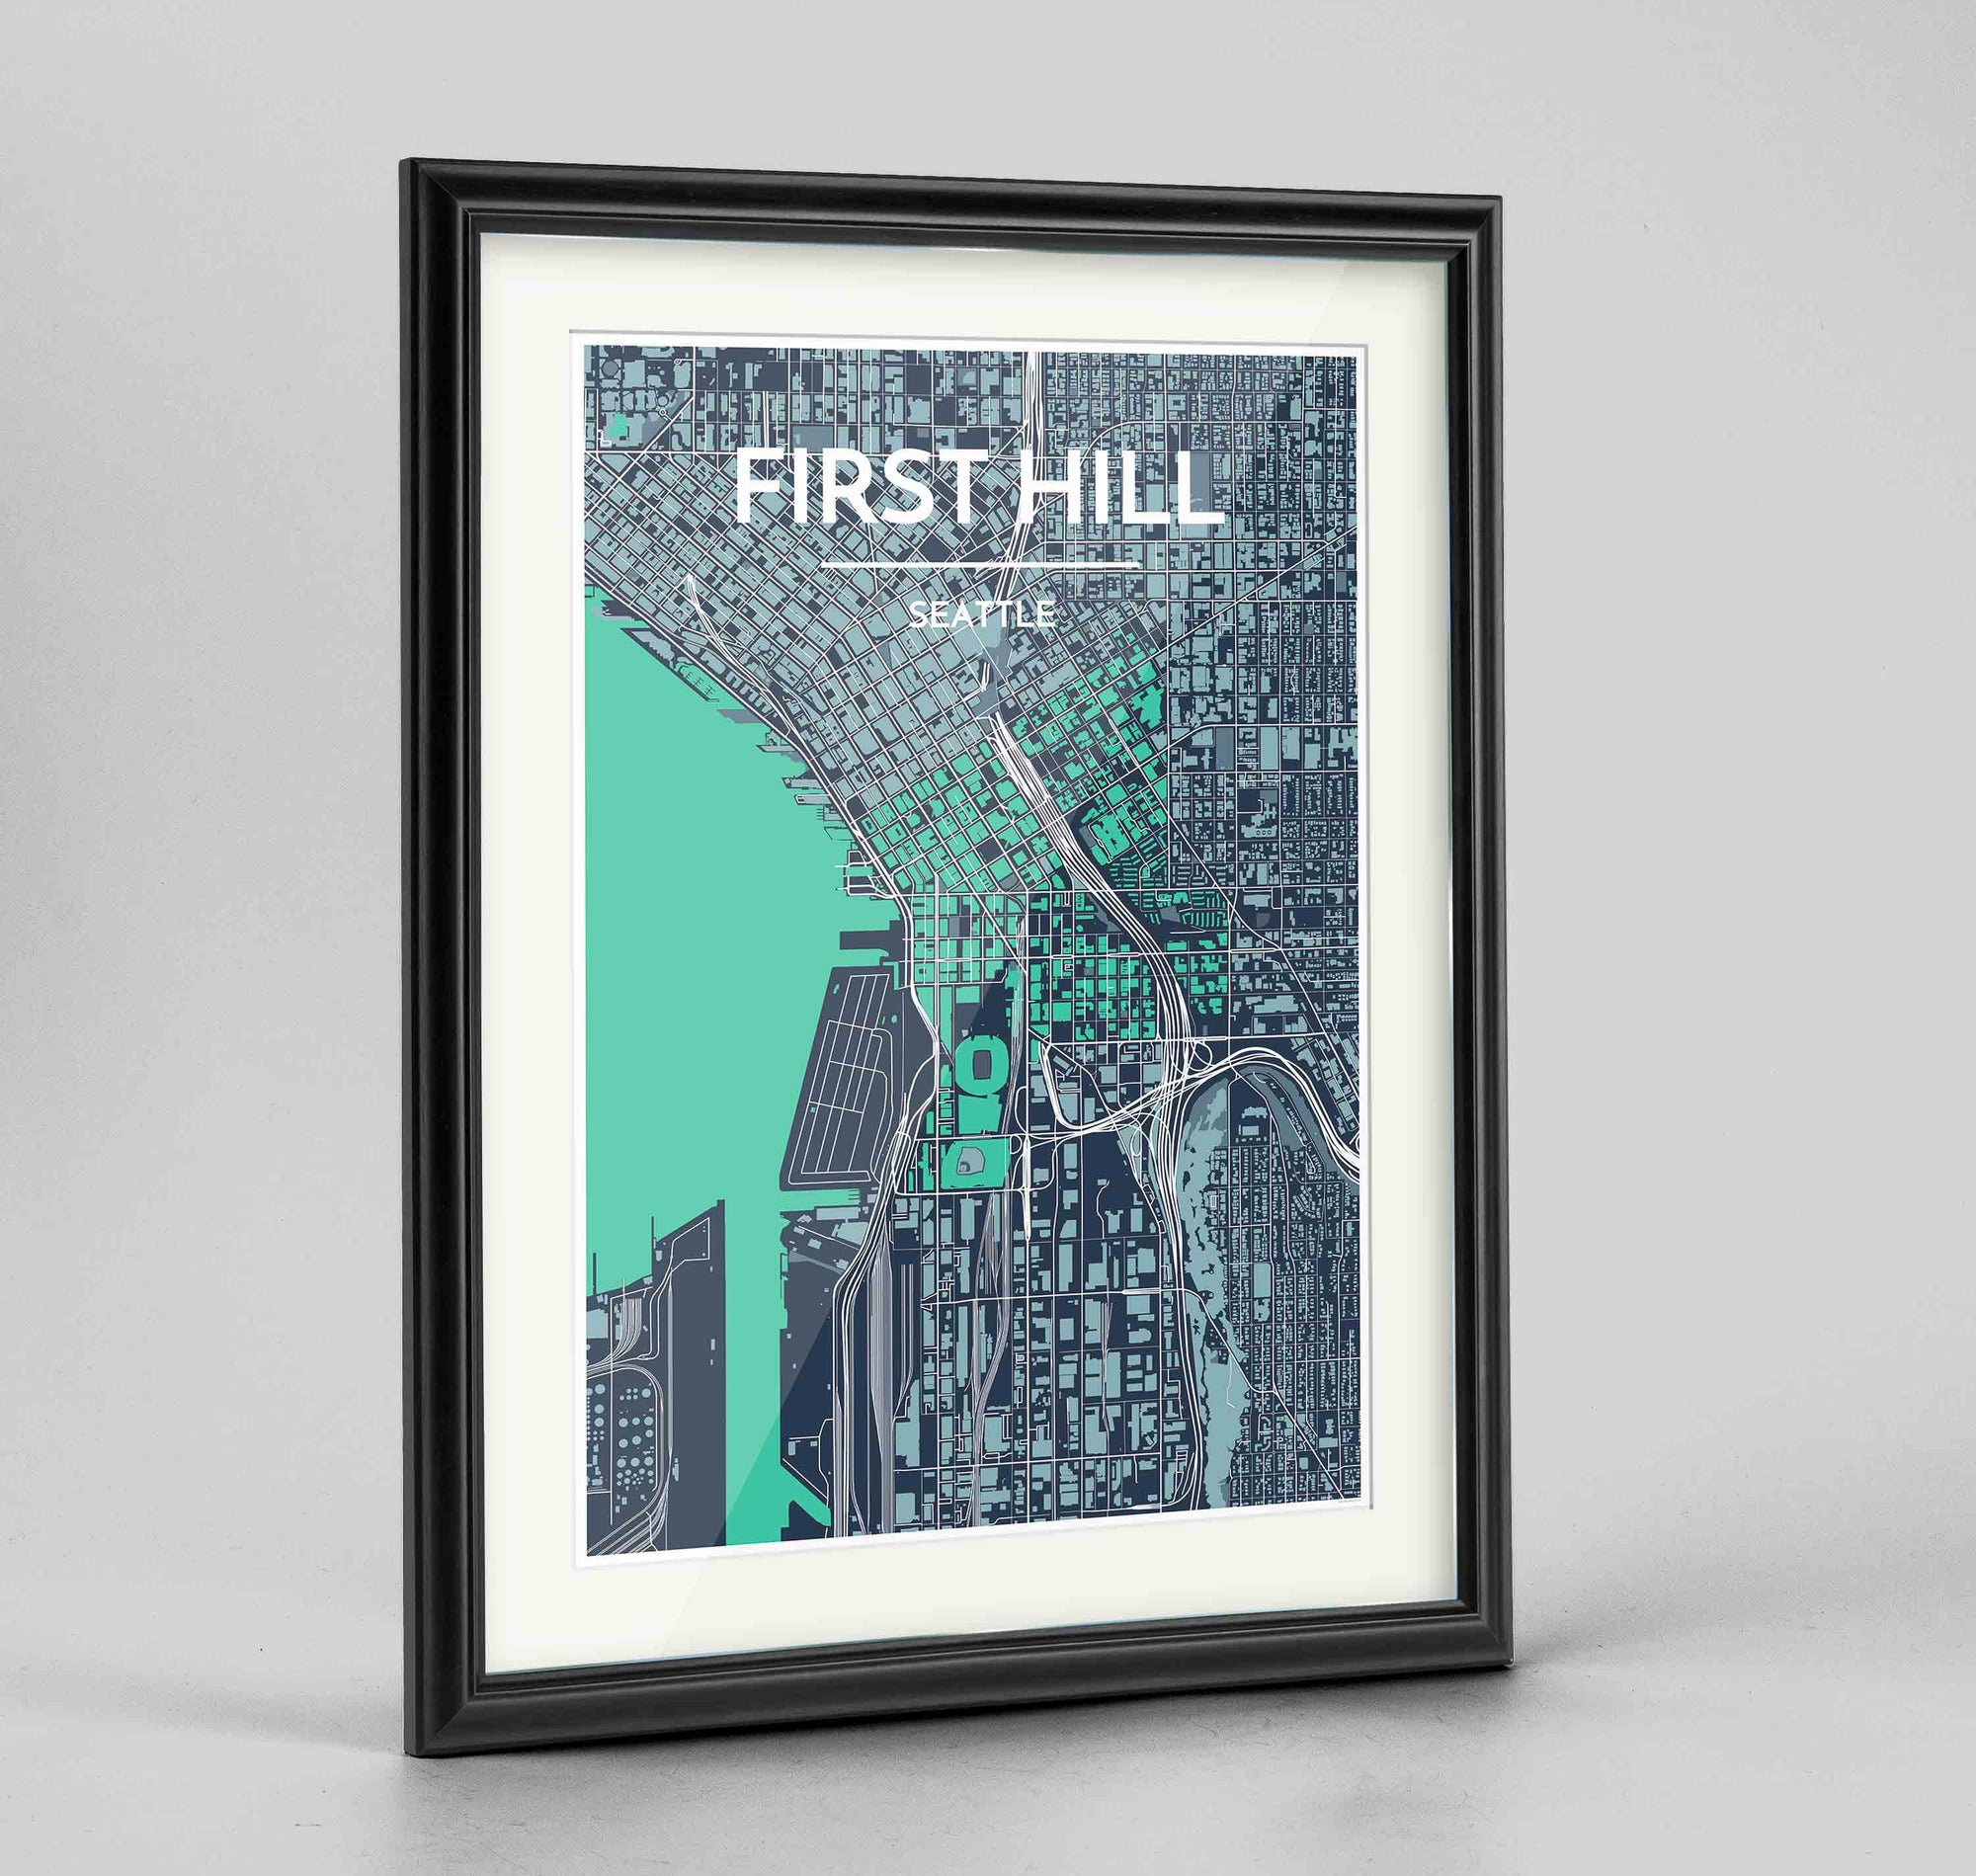 Framed Seattle First Hill Neighbourhood Map Art Print 24x36" Traditional Black frame Point Two Design Group